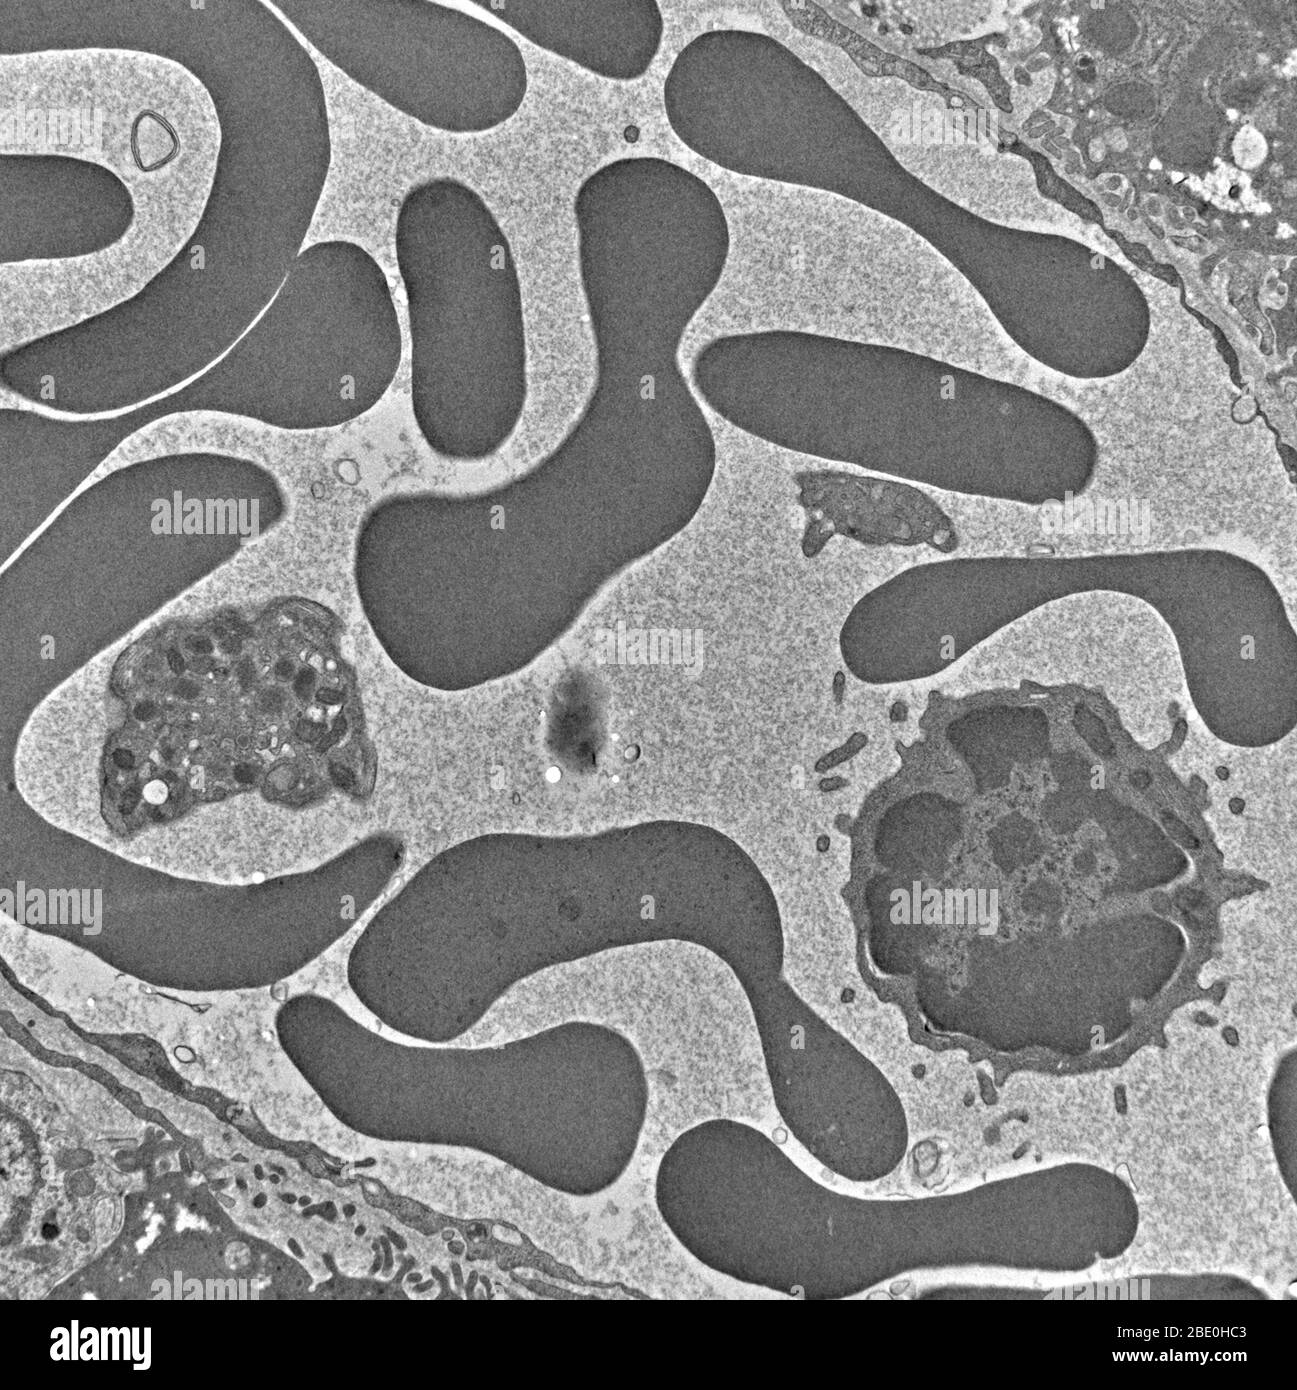 Scanning electron microscopy of human islet cilia